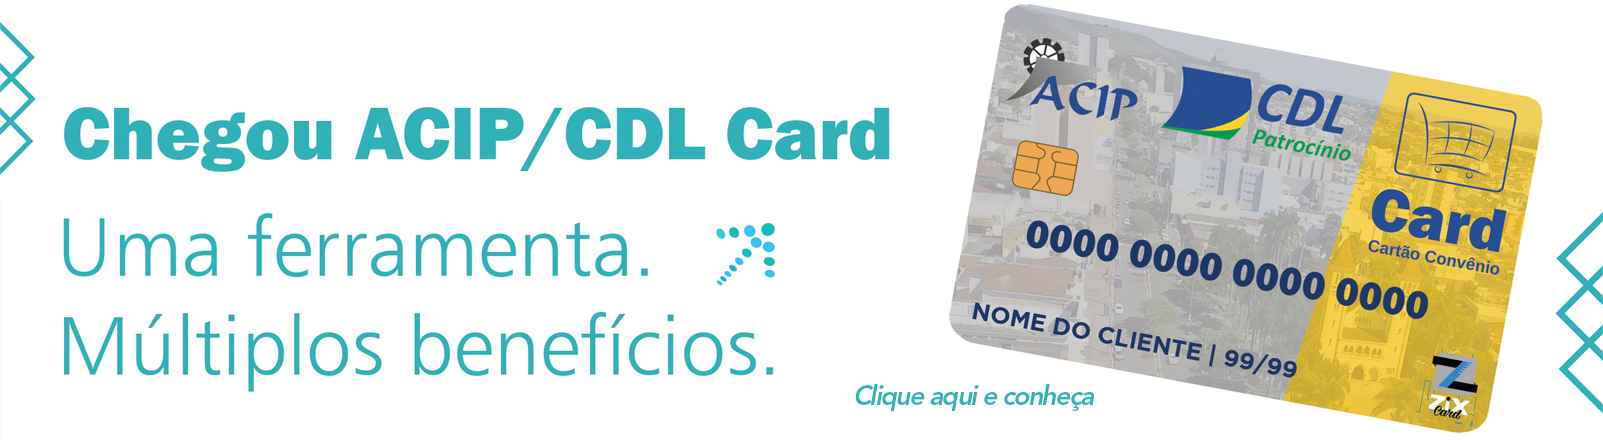 ACIP/CDL Card